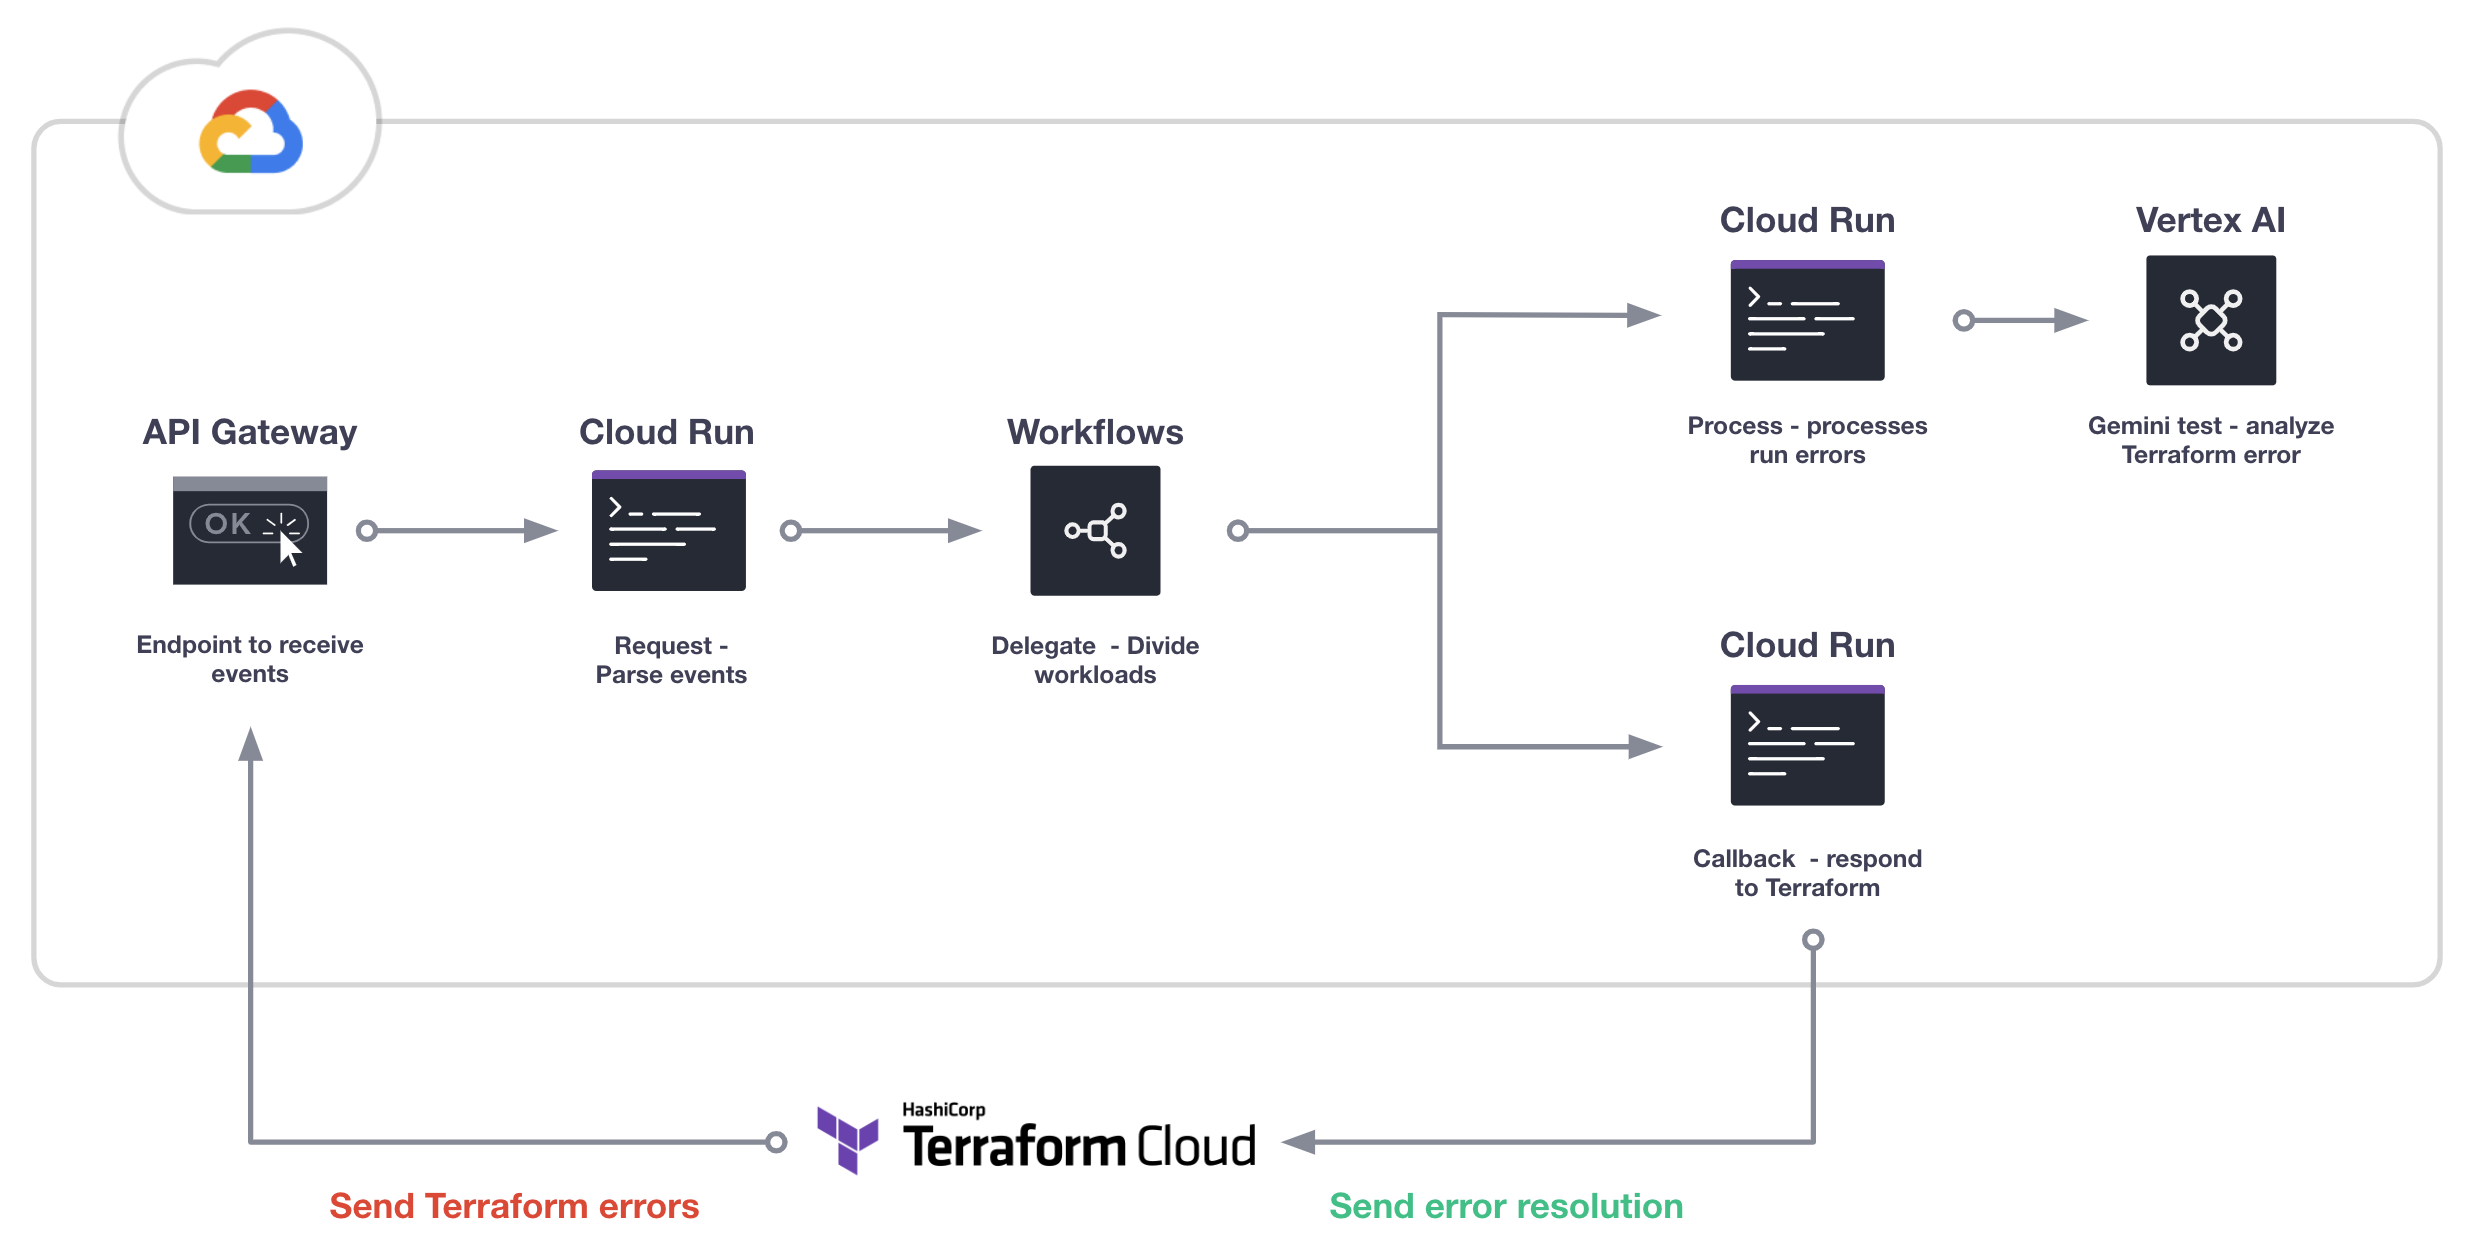 The Terraform AI debugger with Google Cloud architecture